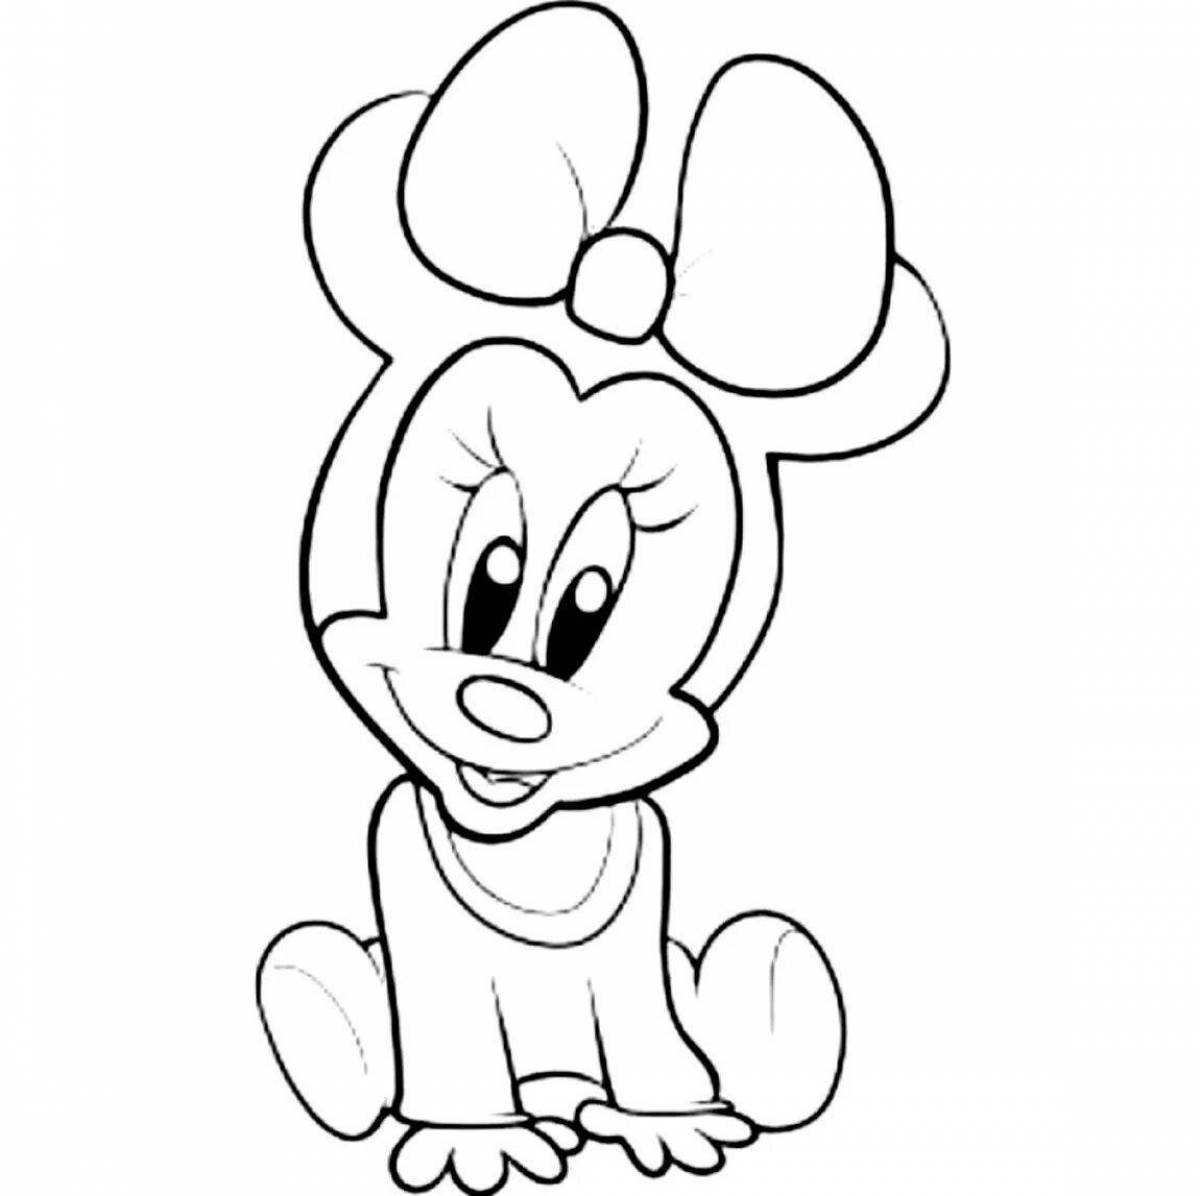 Cartoon mouse #1